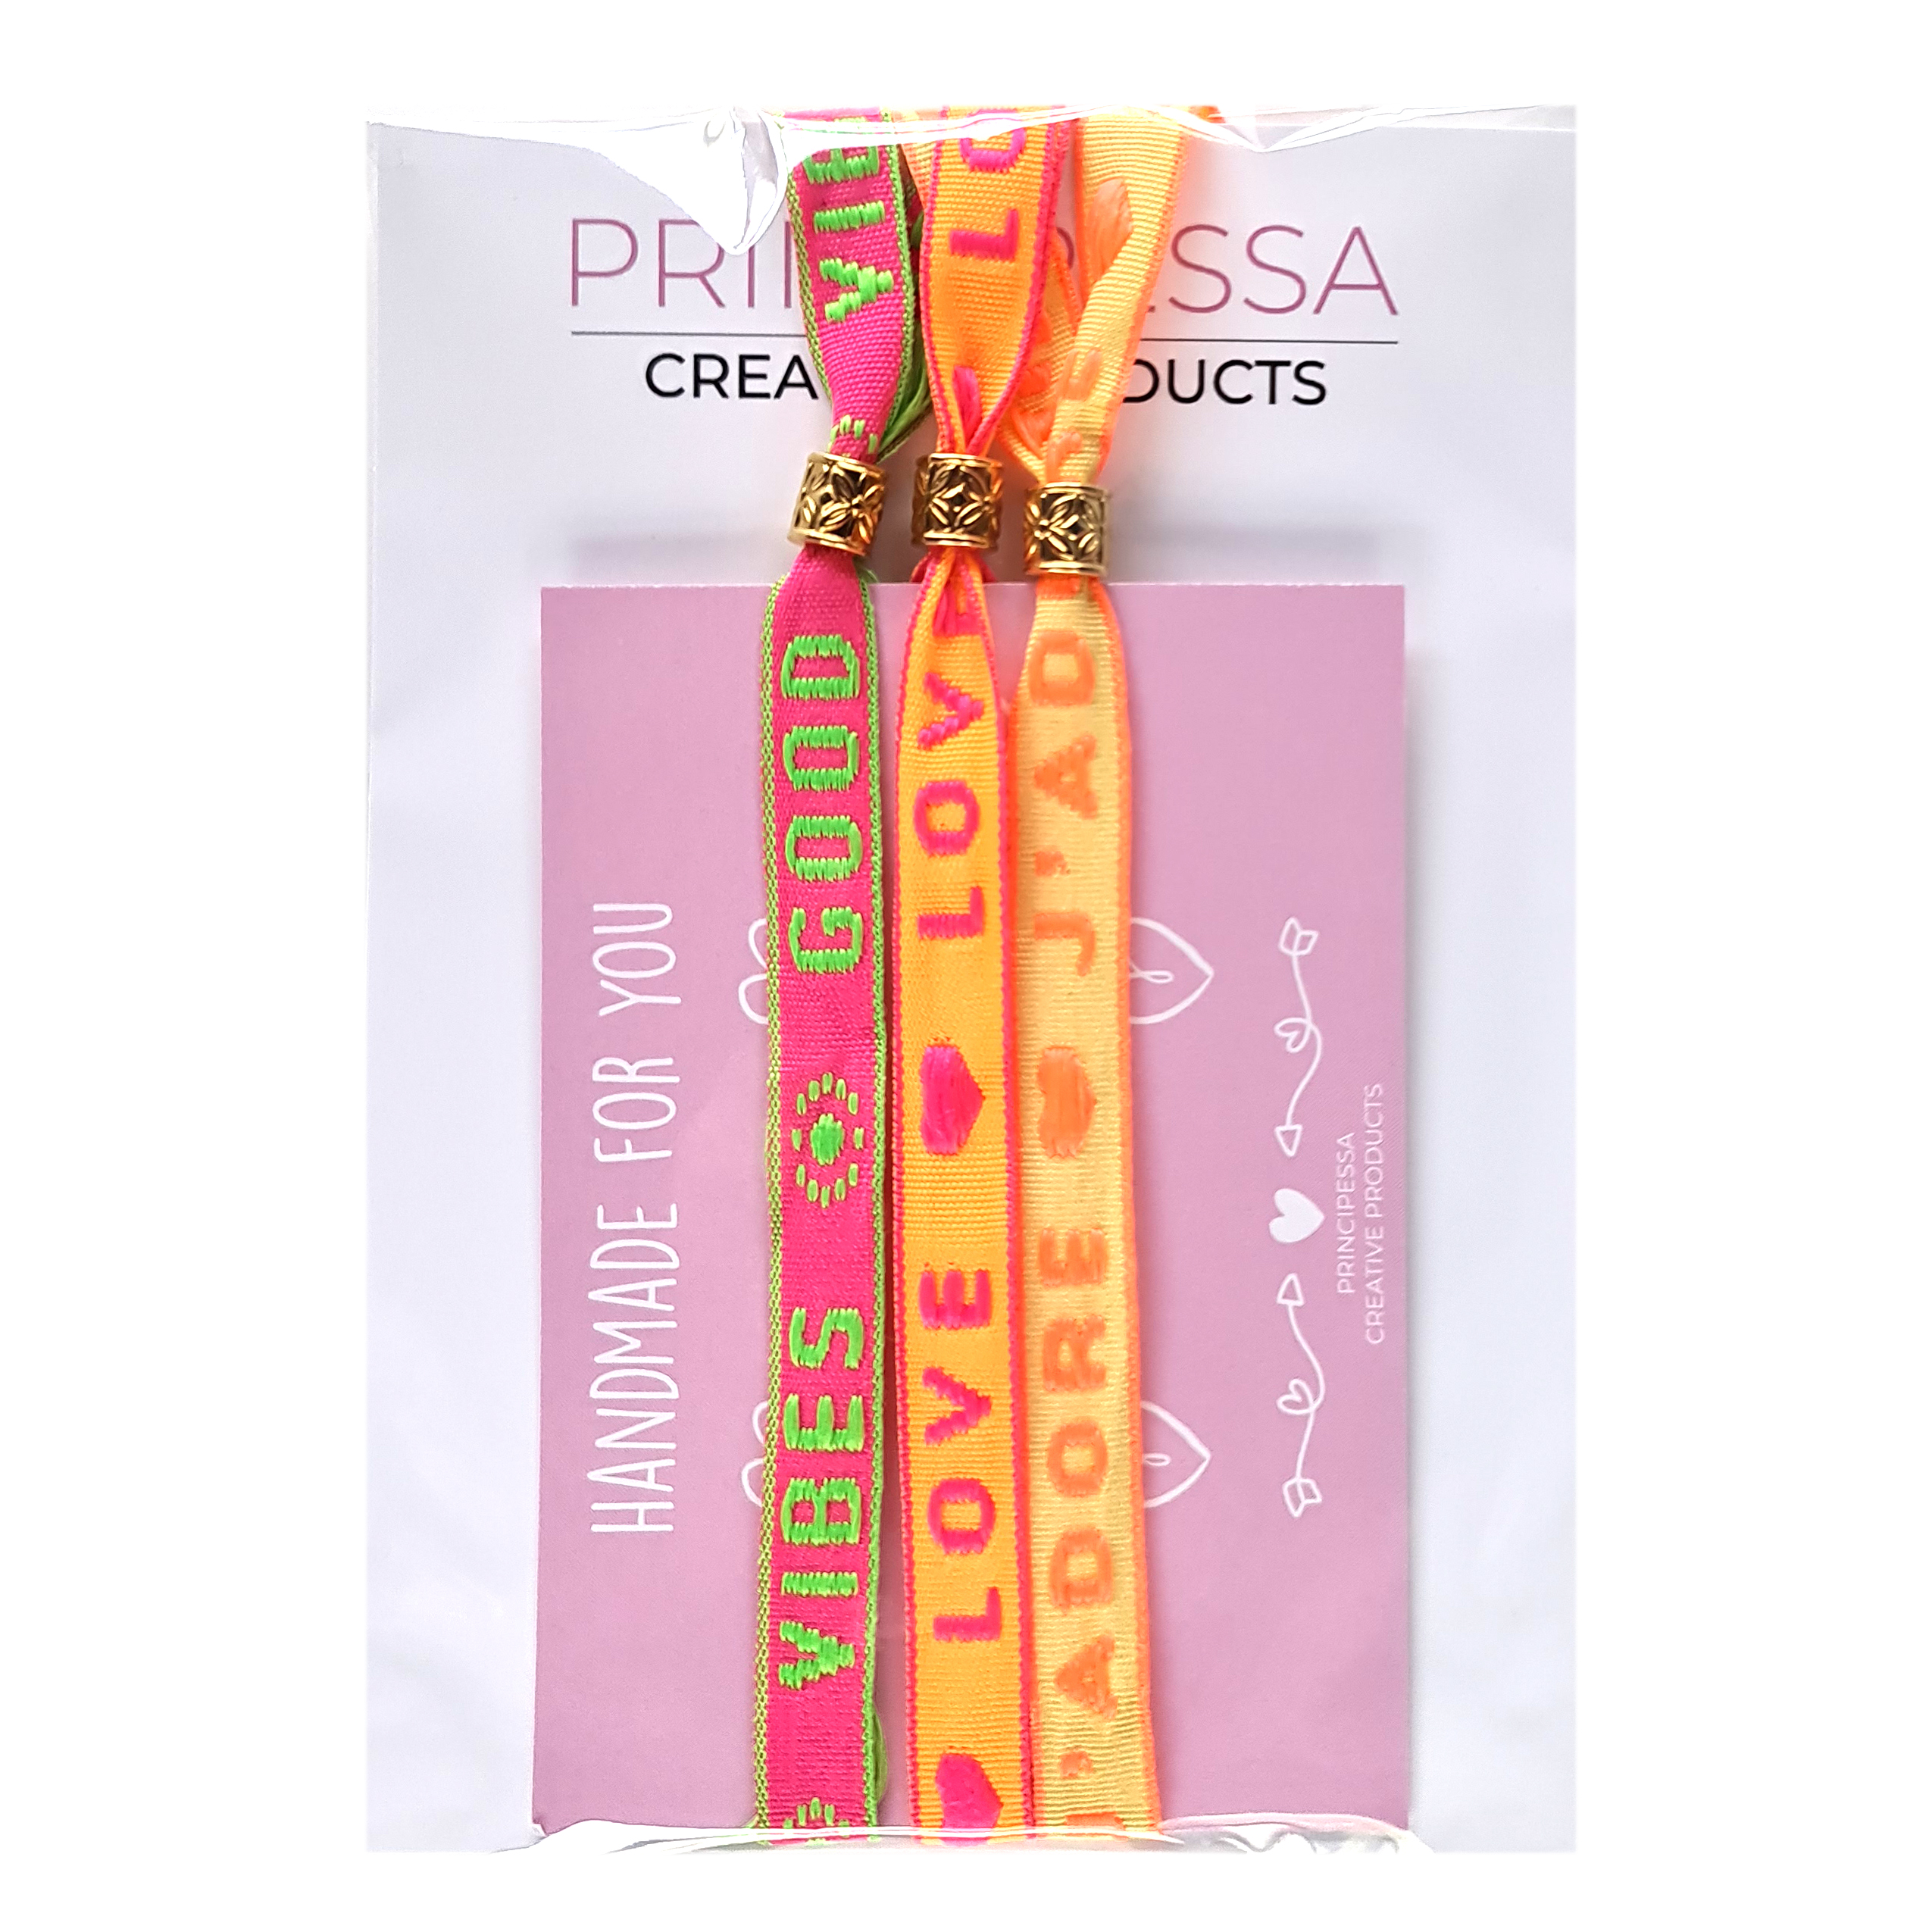 Principessa set van 3 trendy Festival lint armbandjes met tekstlint – Tekst: Good Vibes, Love, J’adore – Kleur: Neon Roze, Oranje, Geel